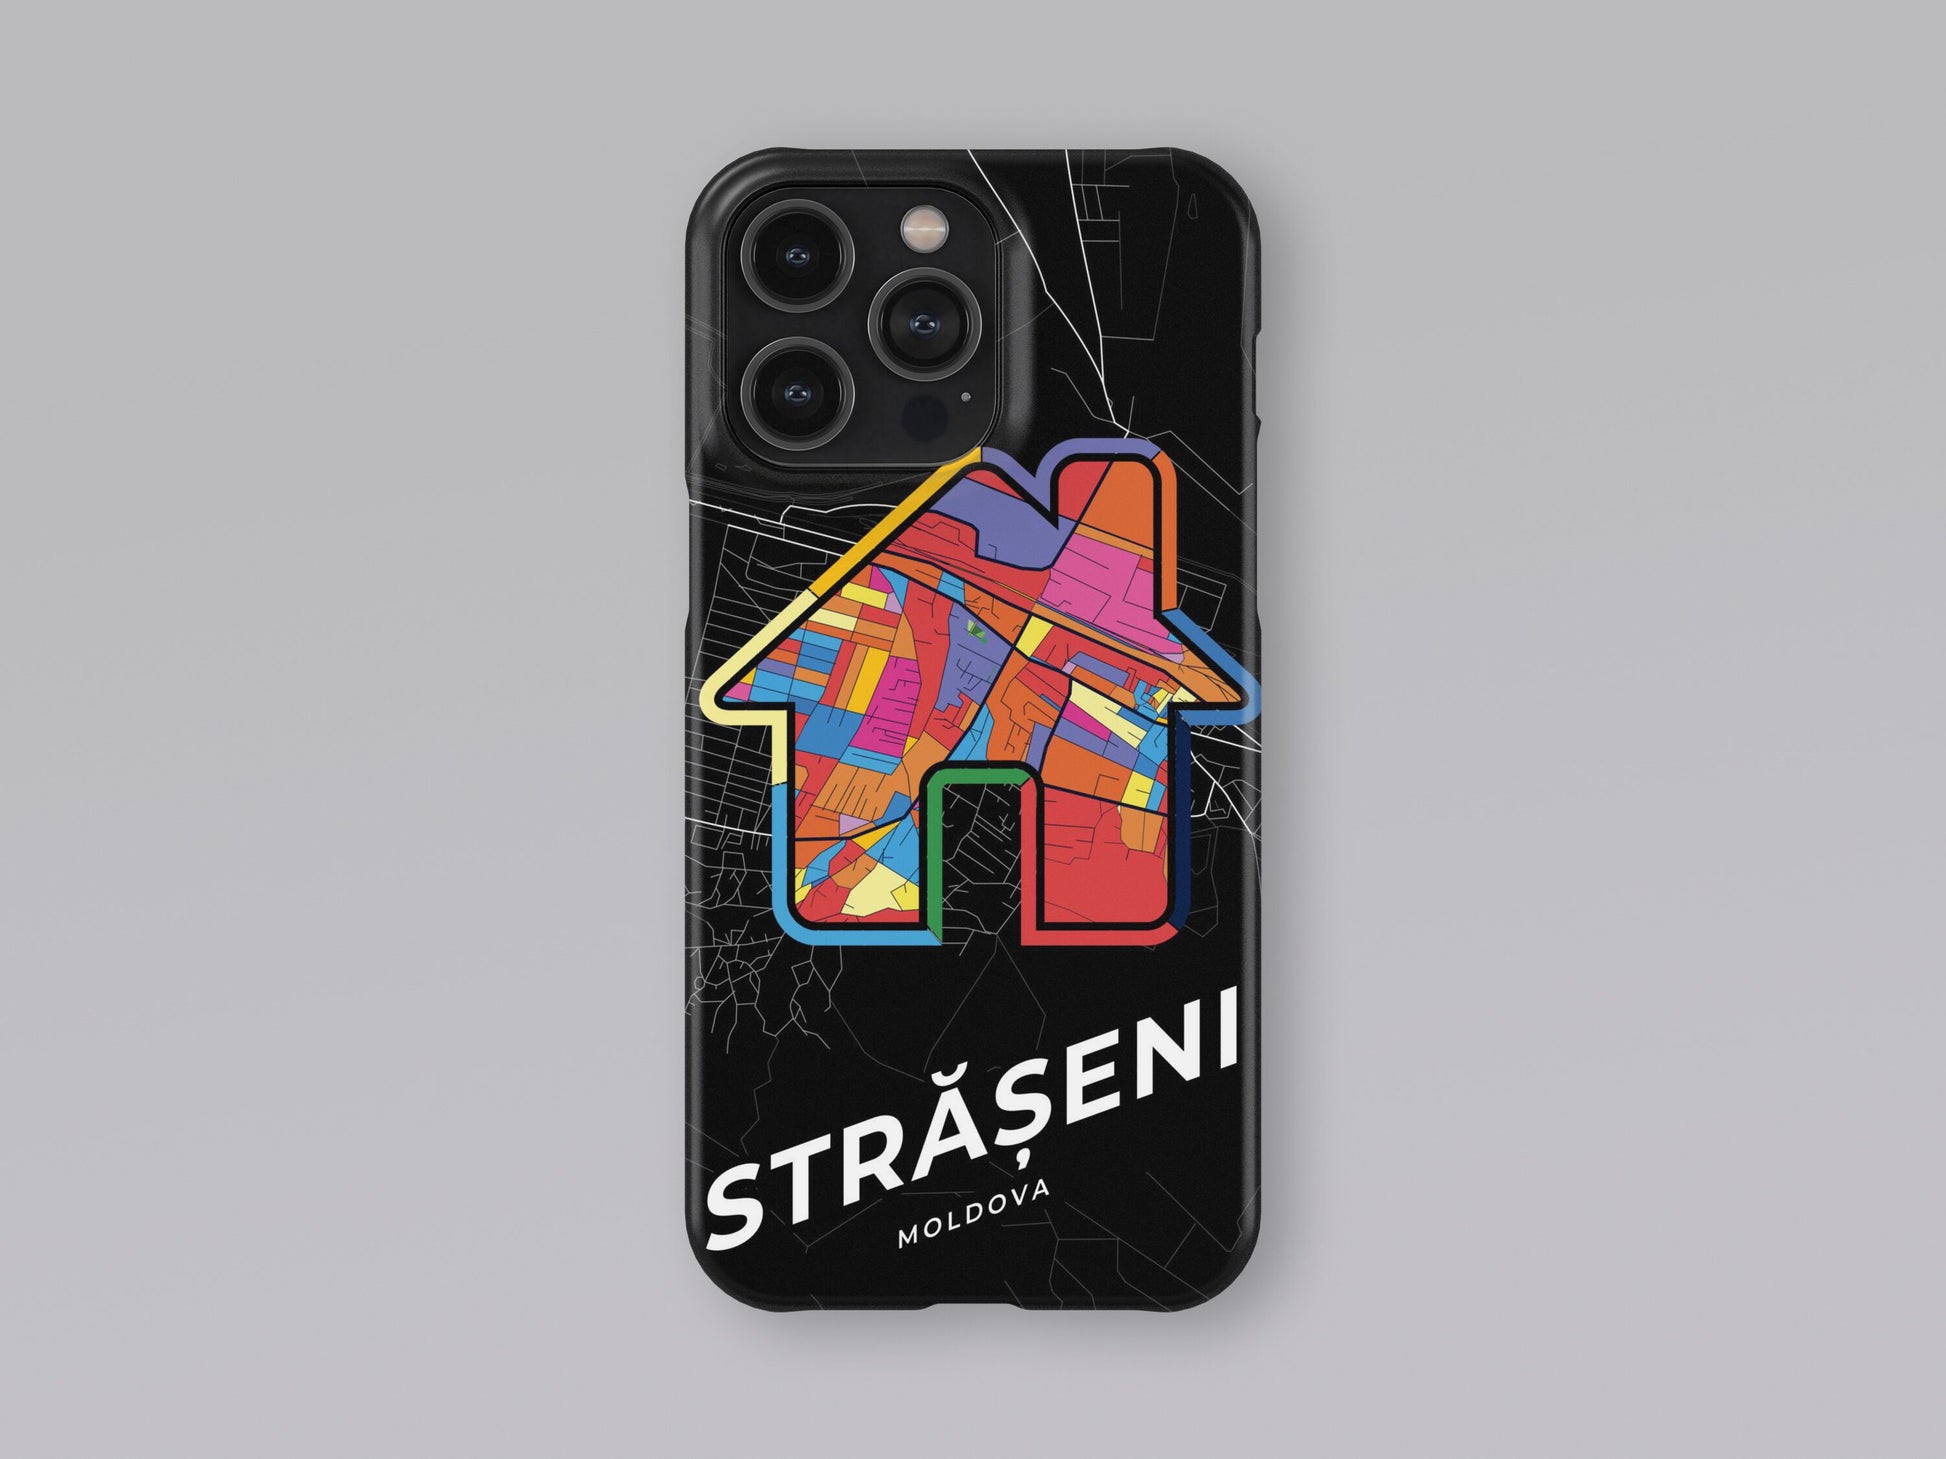 Strășeni Moldova slim phone case with colorful icon 3